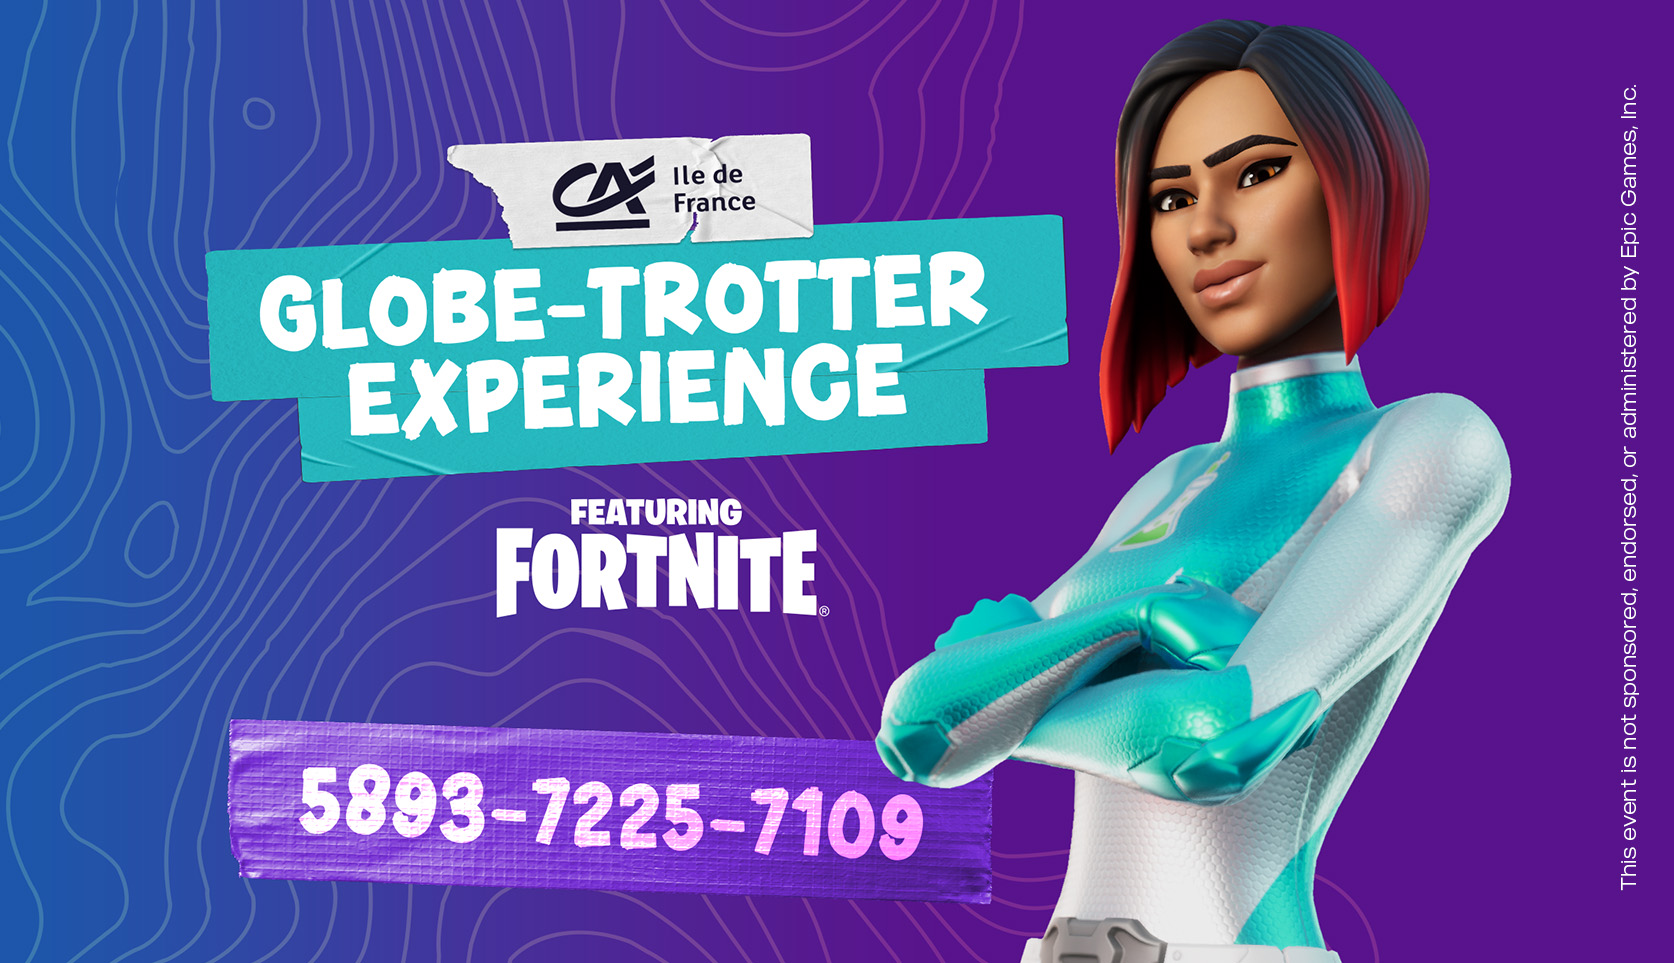 Affiche globe-trotter featuring Fortnite